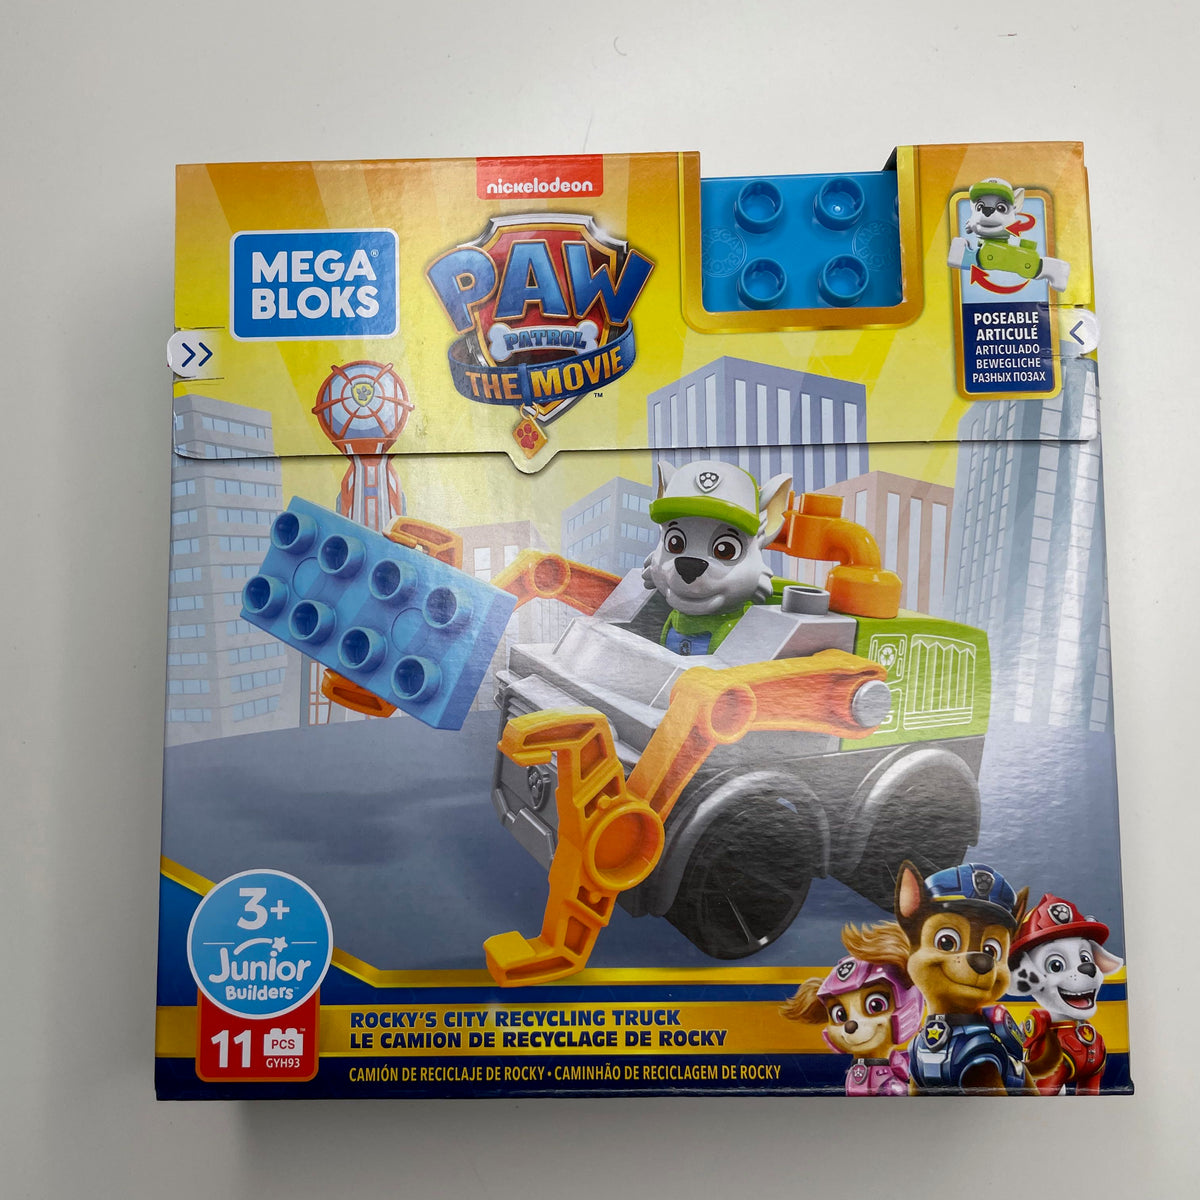 Mega Bloks ROCKY Paw Patrol Junior Builders VHTF NIB Mattel